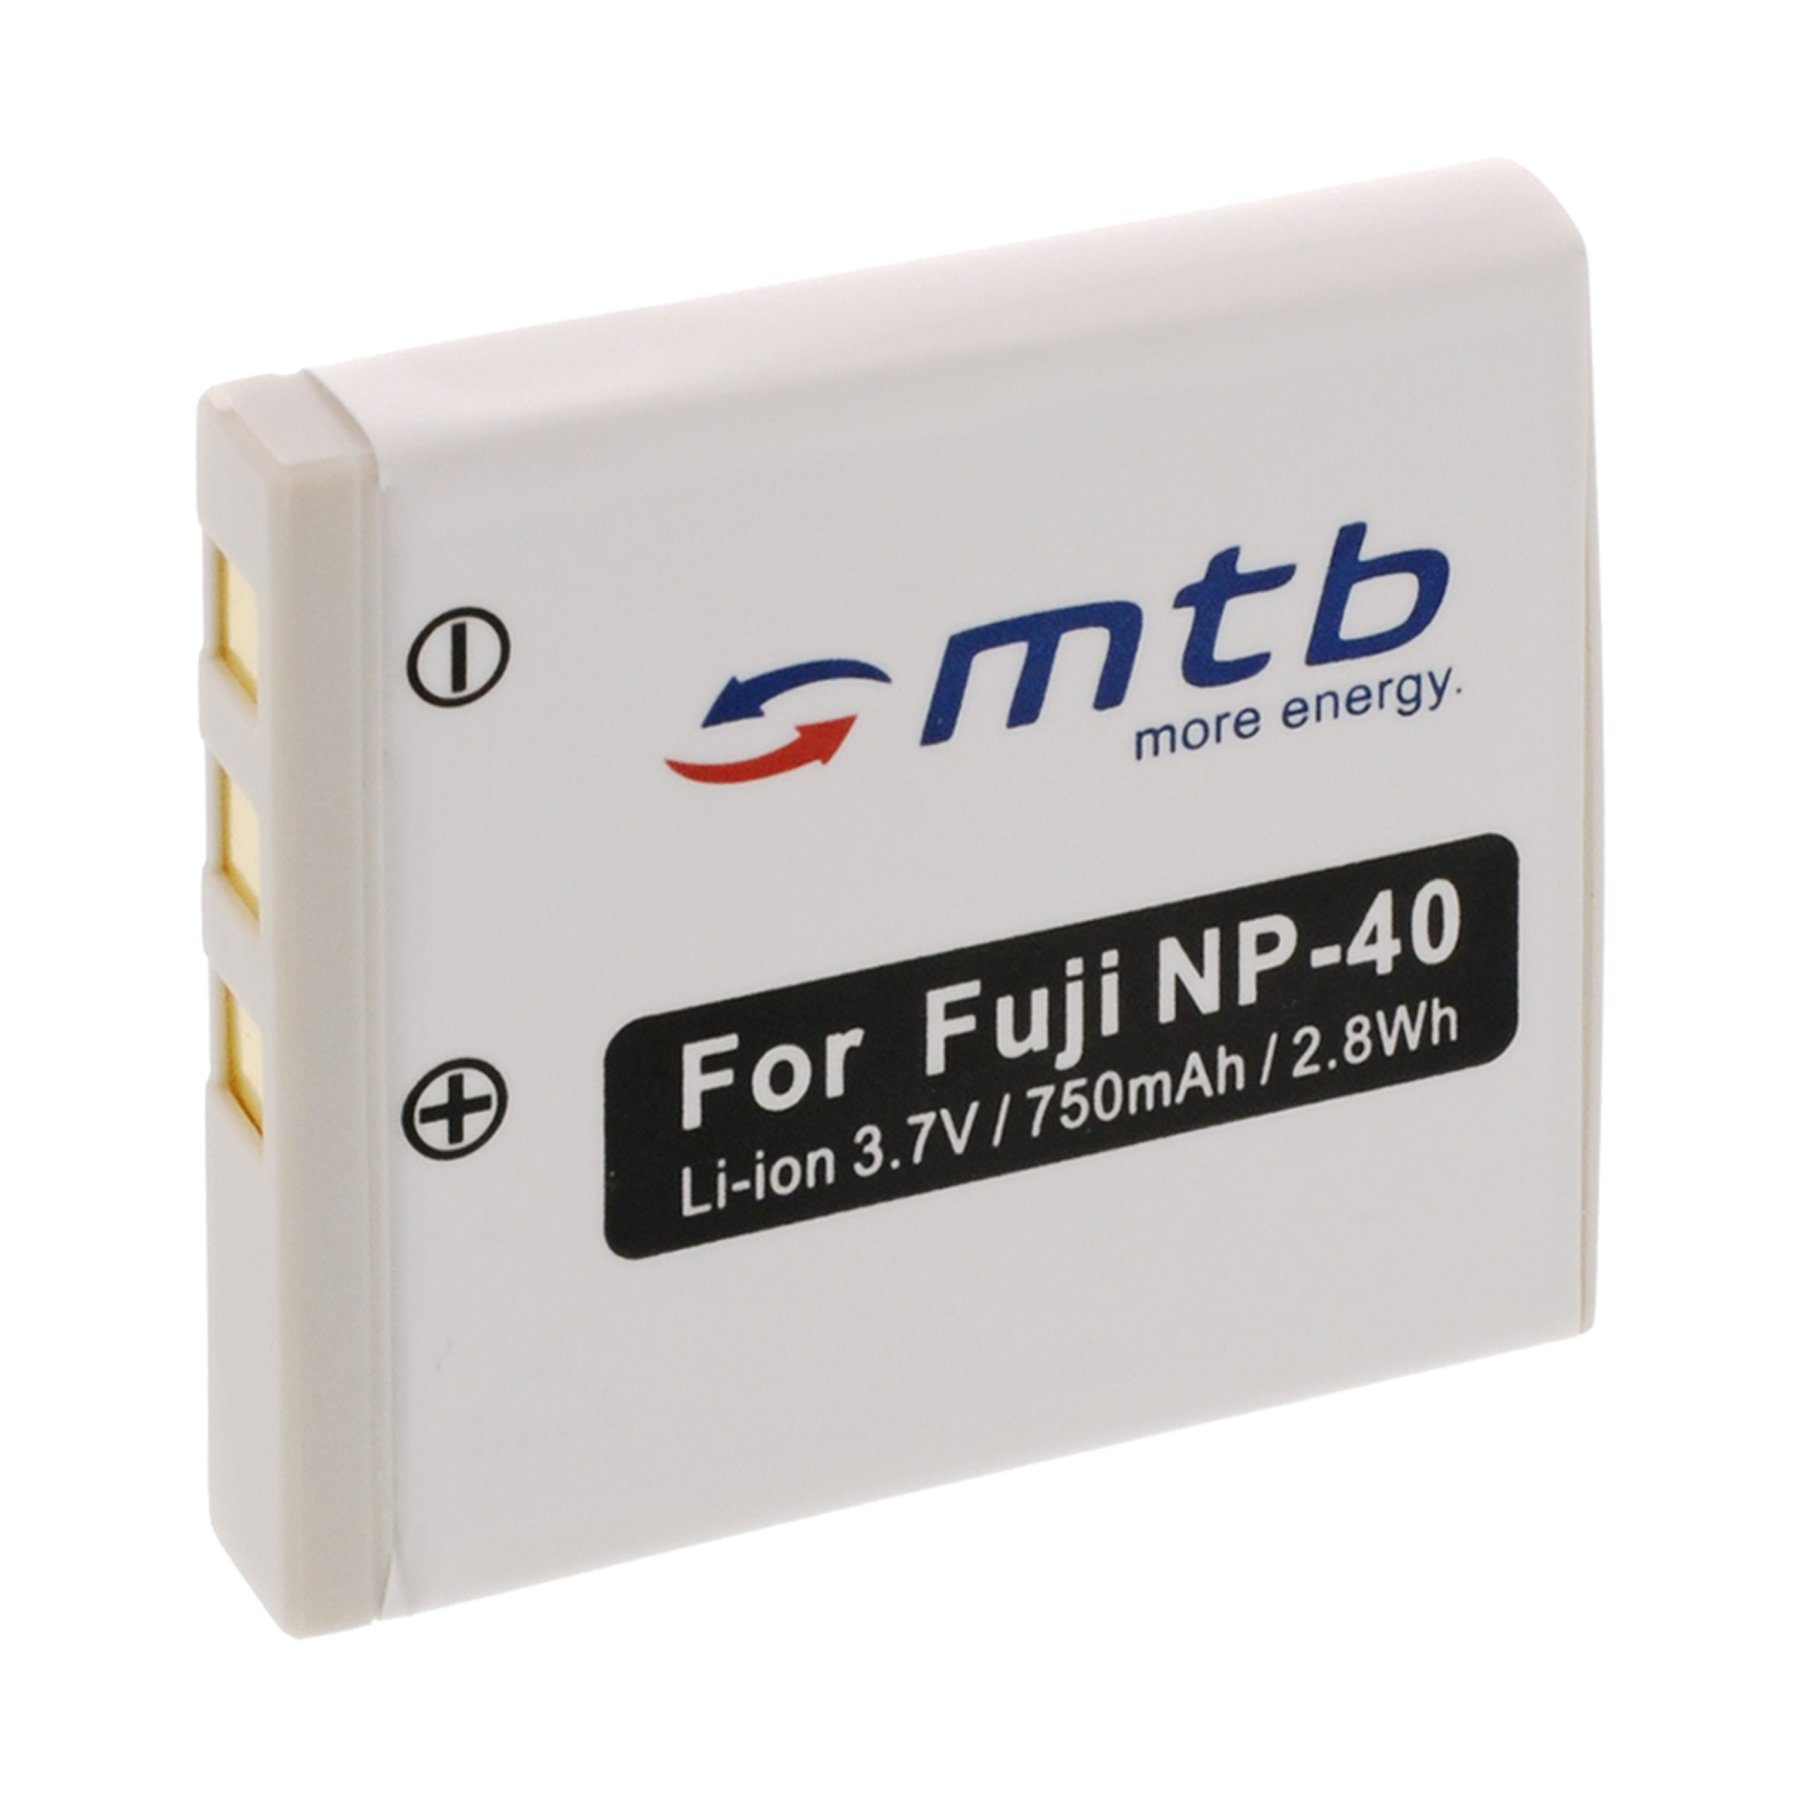 mtb more energy [BAT-021 - Li-Ion] Kamera-Akku kompatibel mit Akku-Typ Fuji NP-40 750 mAh (3,7 V), passend für: Fuji Fujifilm Finepix F402, F455, F460, F470, F480, F485, F610, F650, F700, F710, F810, J50, V10, Z1, Z2, Z3, Z5fd // // Creative Vado Pocket Video Cam // // Easypix DVC5308 HD, S530, SDV 1200, TS530, VX600, … | Akkus und PowerBanks